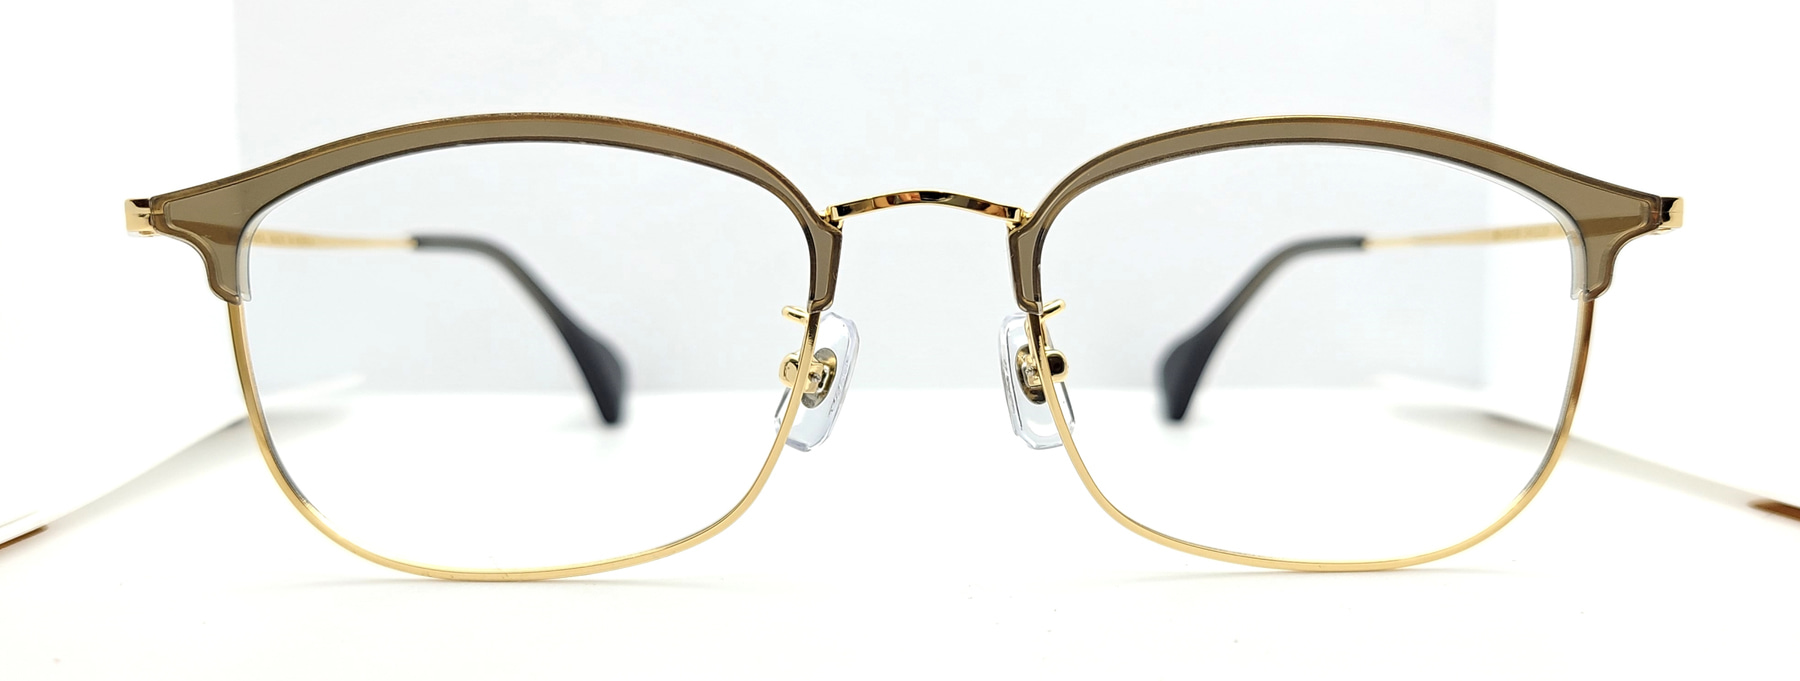 MINIHOUSE M-1418, Korean glasses, sunglasses, eyeglasses, glasses